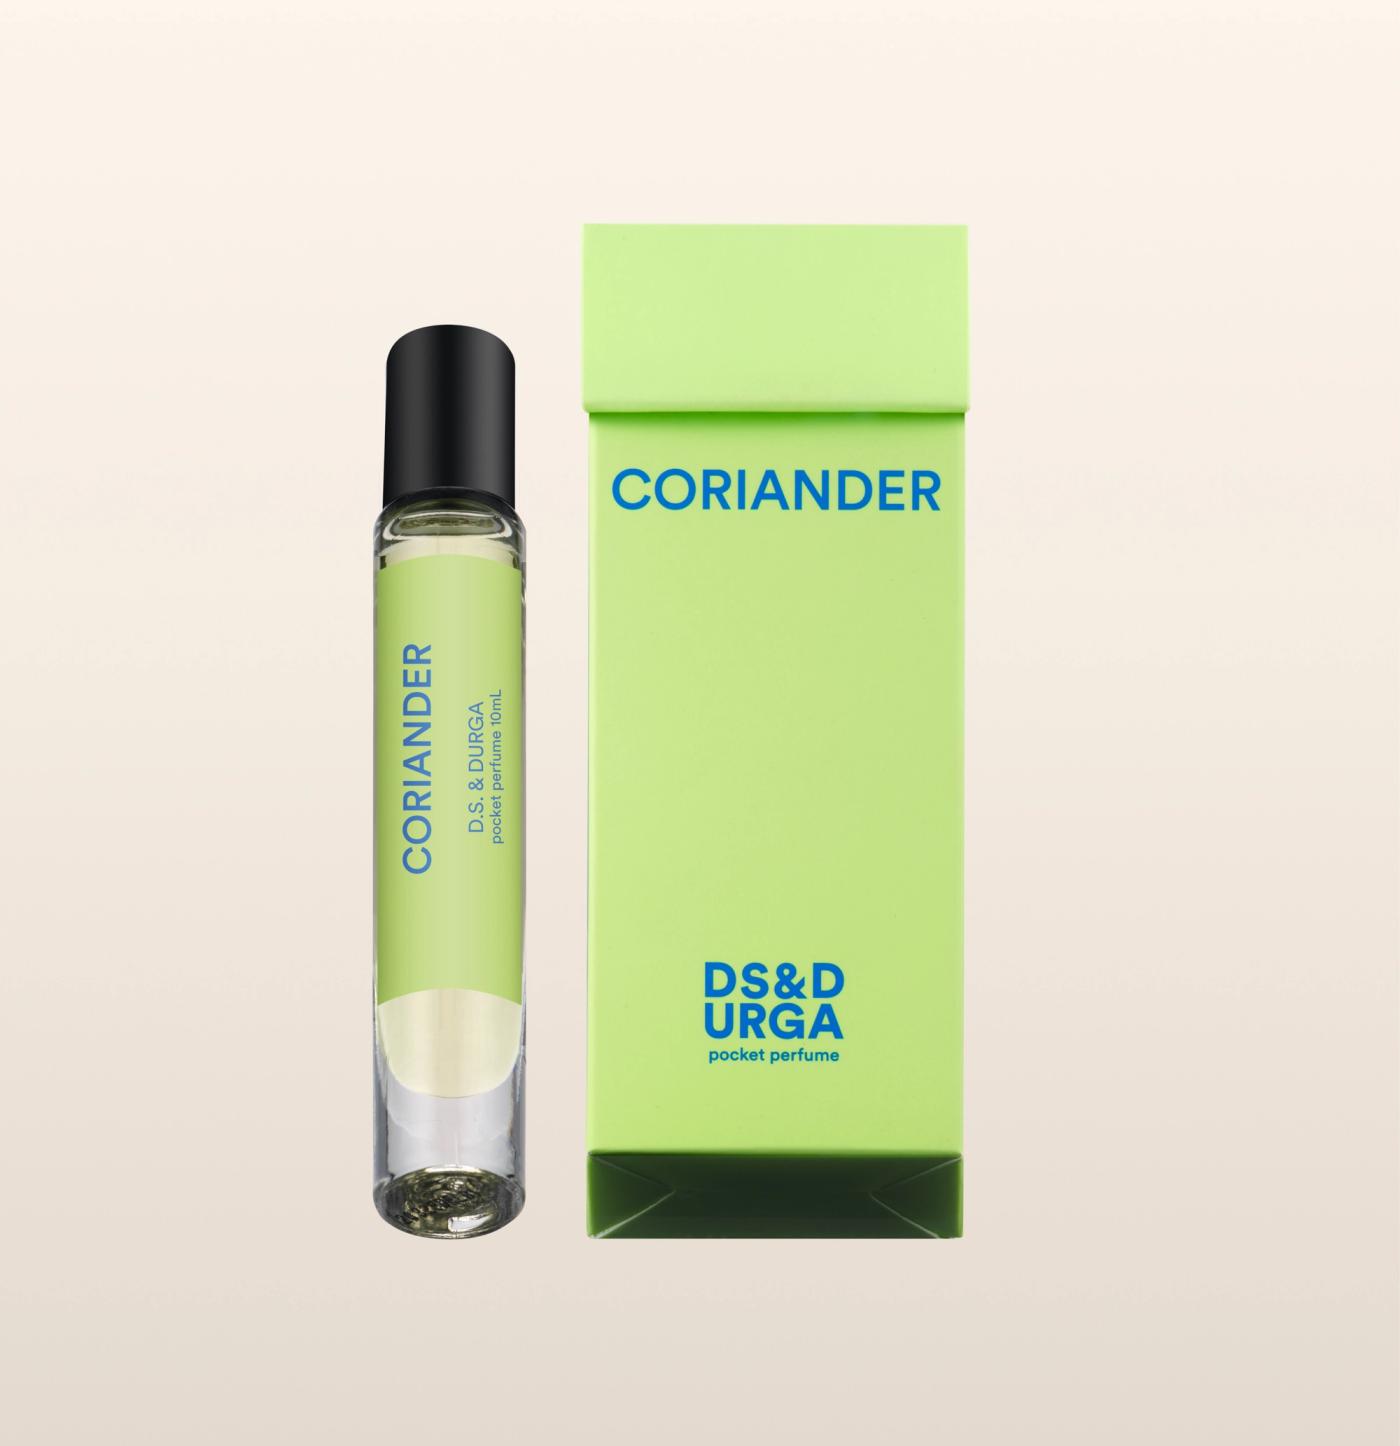 Coriander Pocket Perfume by D.S. & Durga